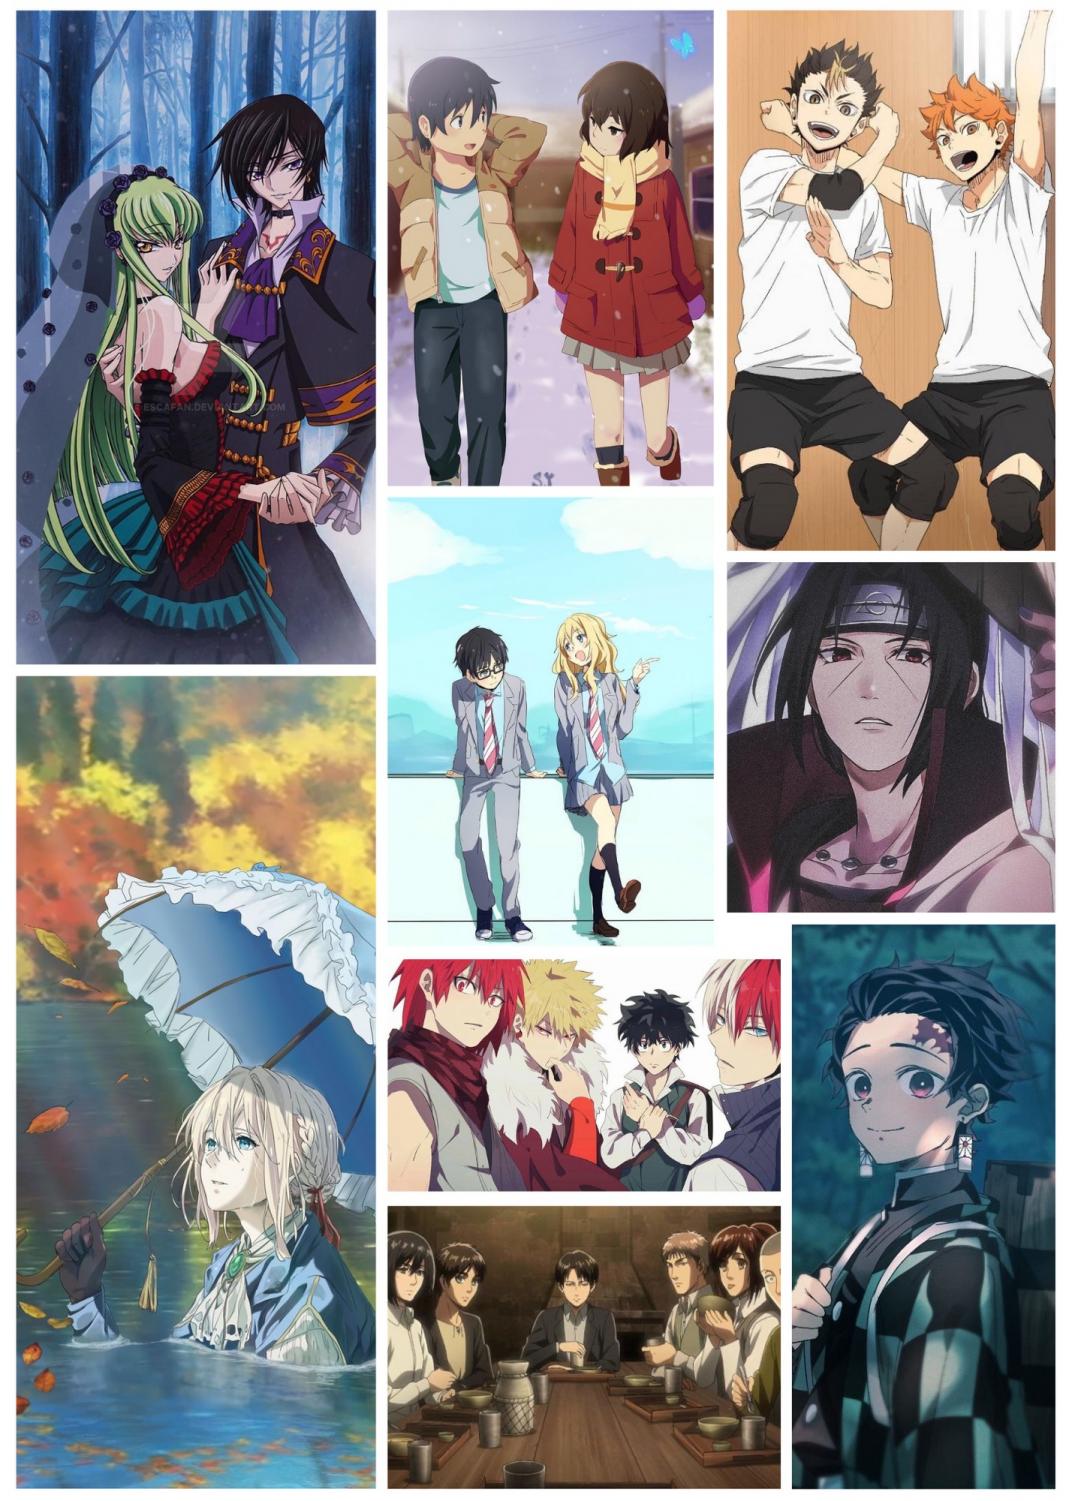 Anime Girl Trio - Other & Anime Background Wallpapers on Desktop Nexus  (Image 2247055)